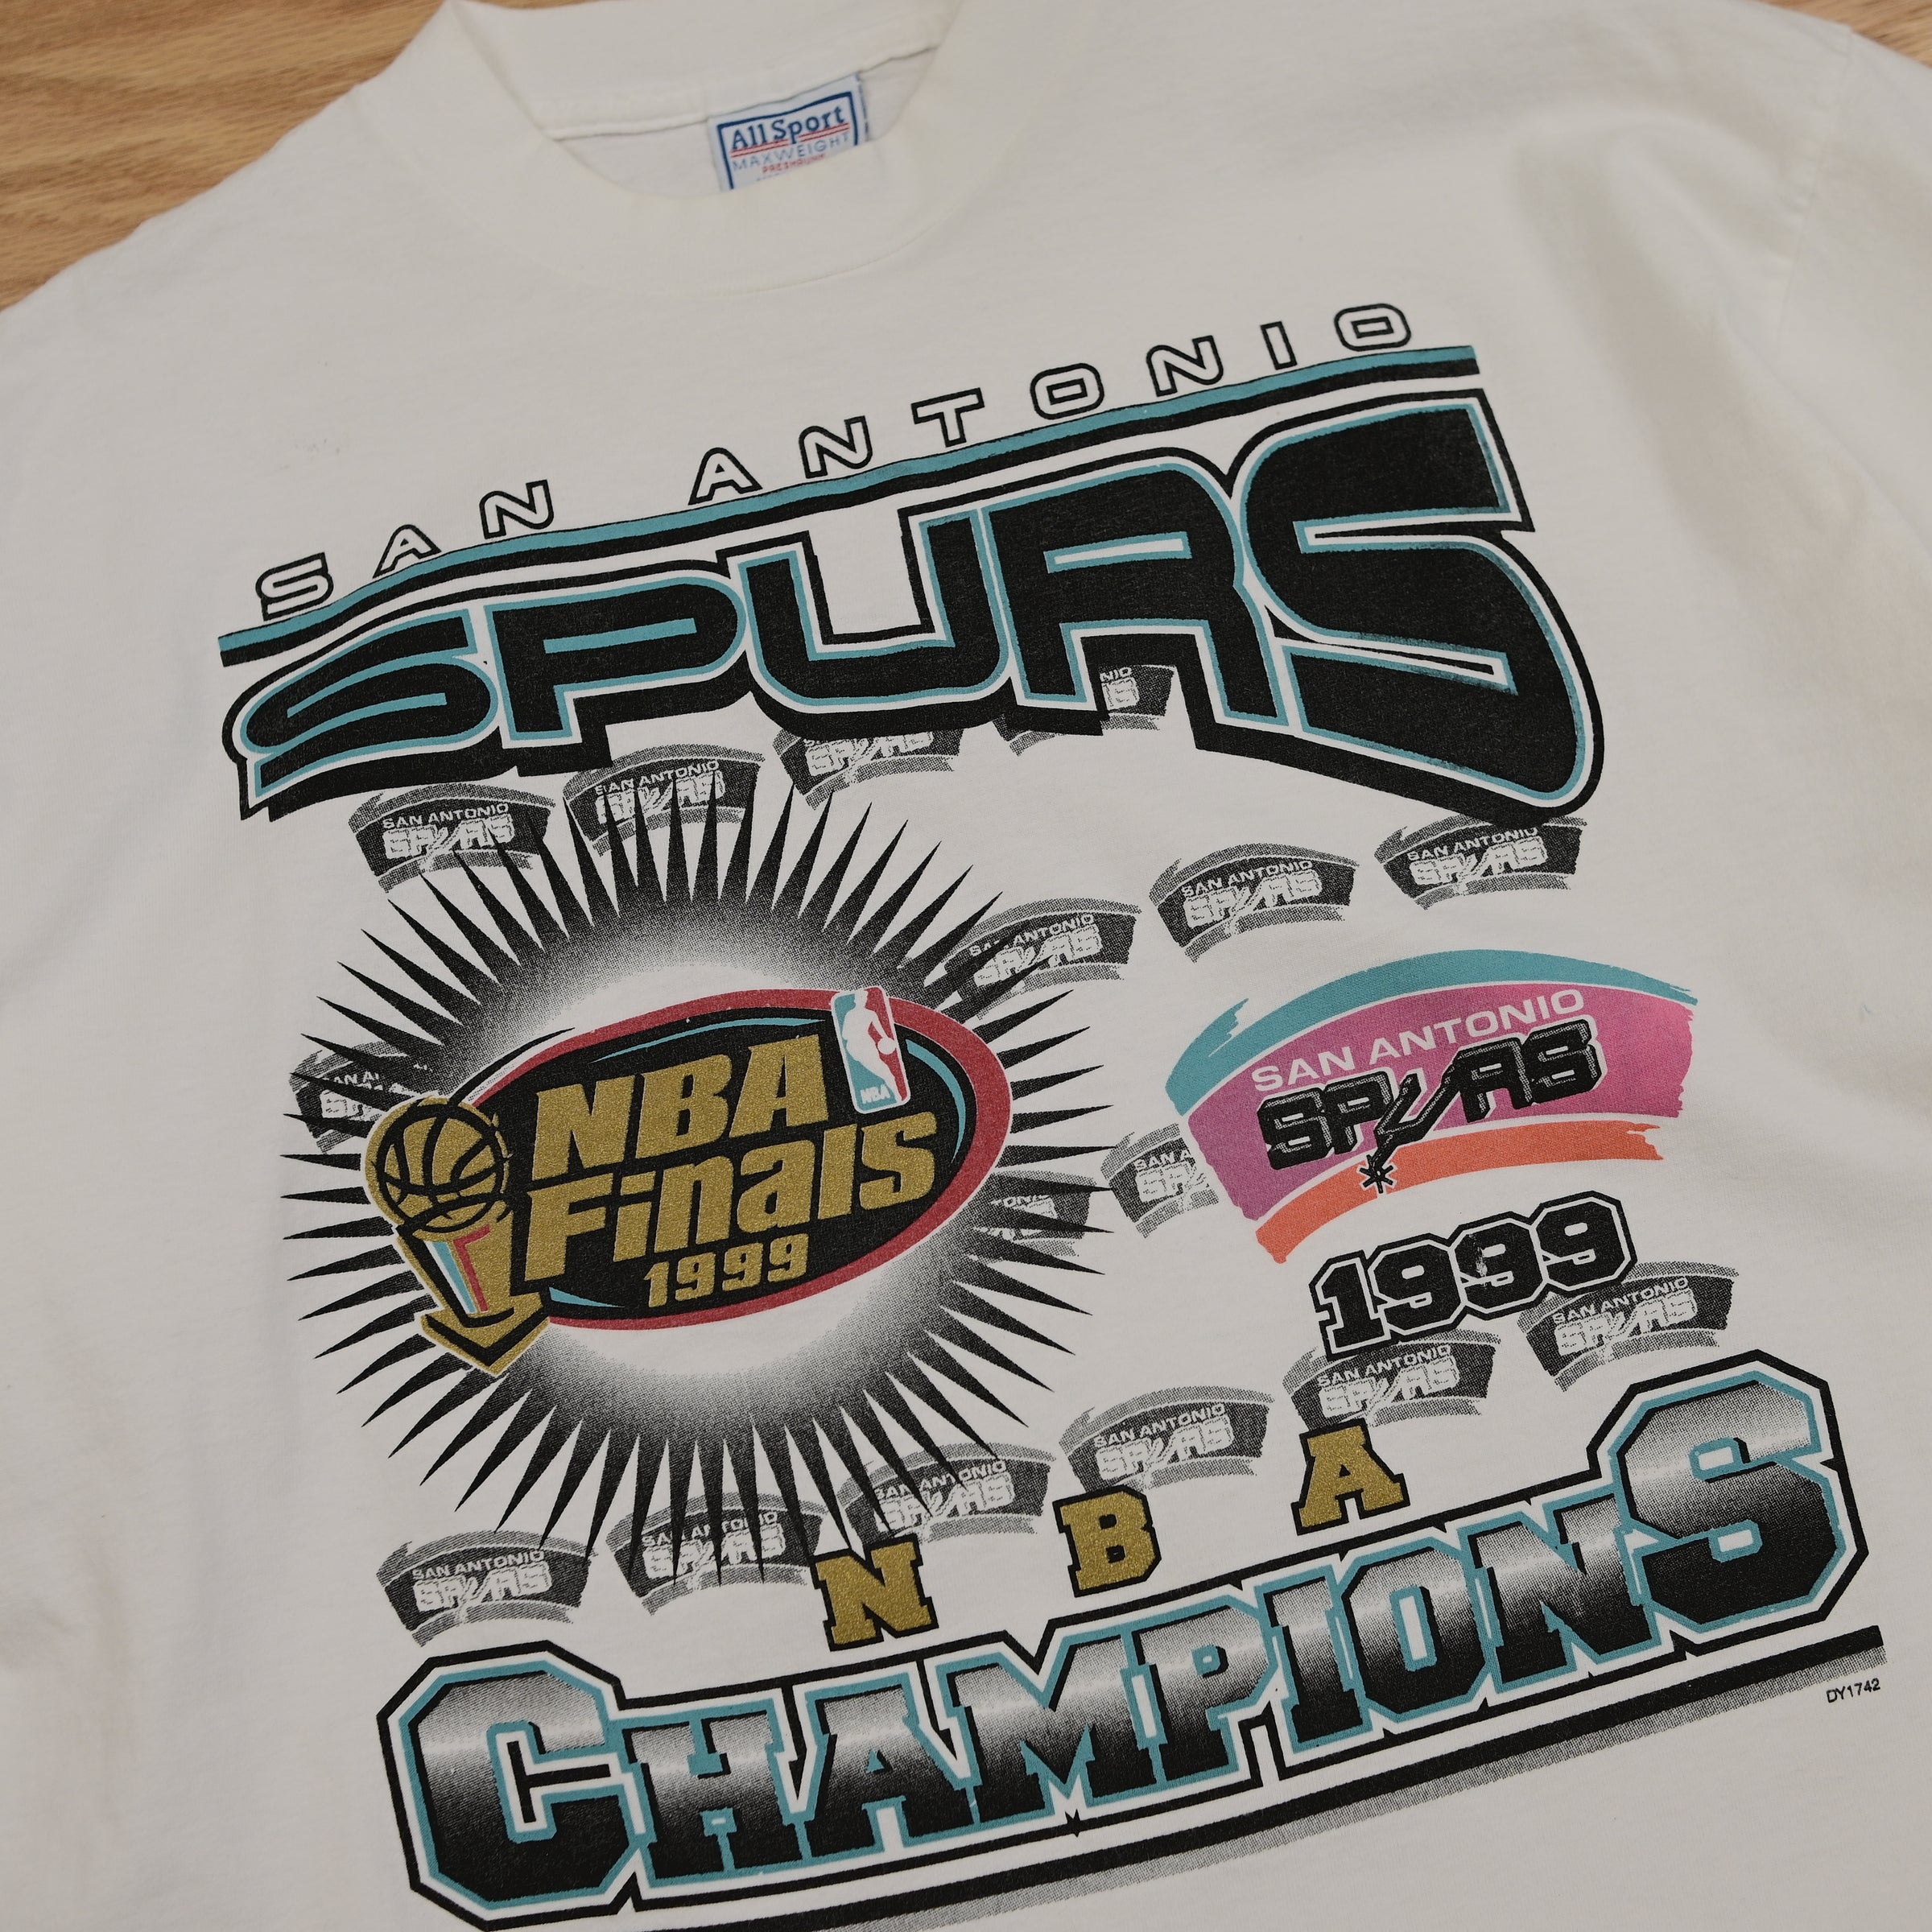 Vintage San Antonio Spurs 1999 Finals Champions T Shirt Tee 